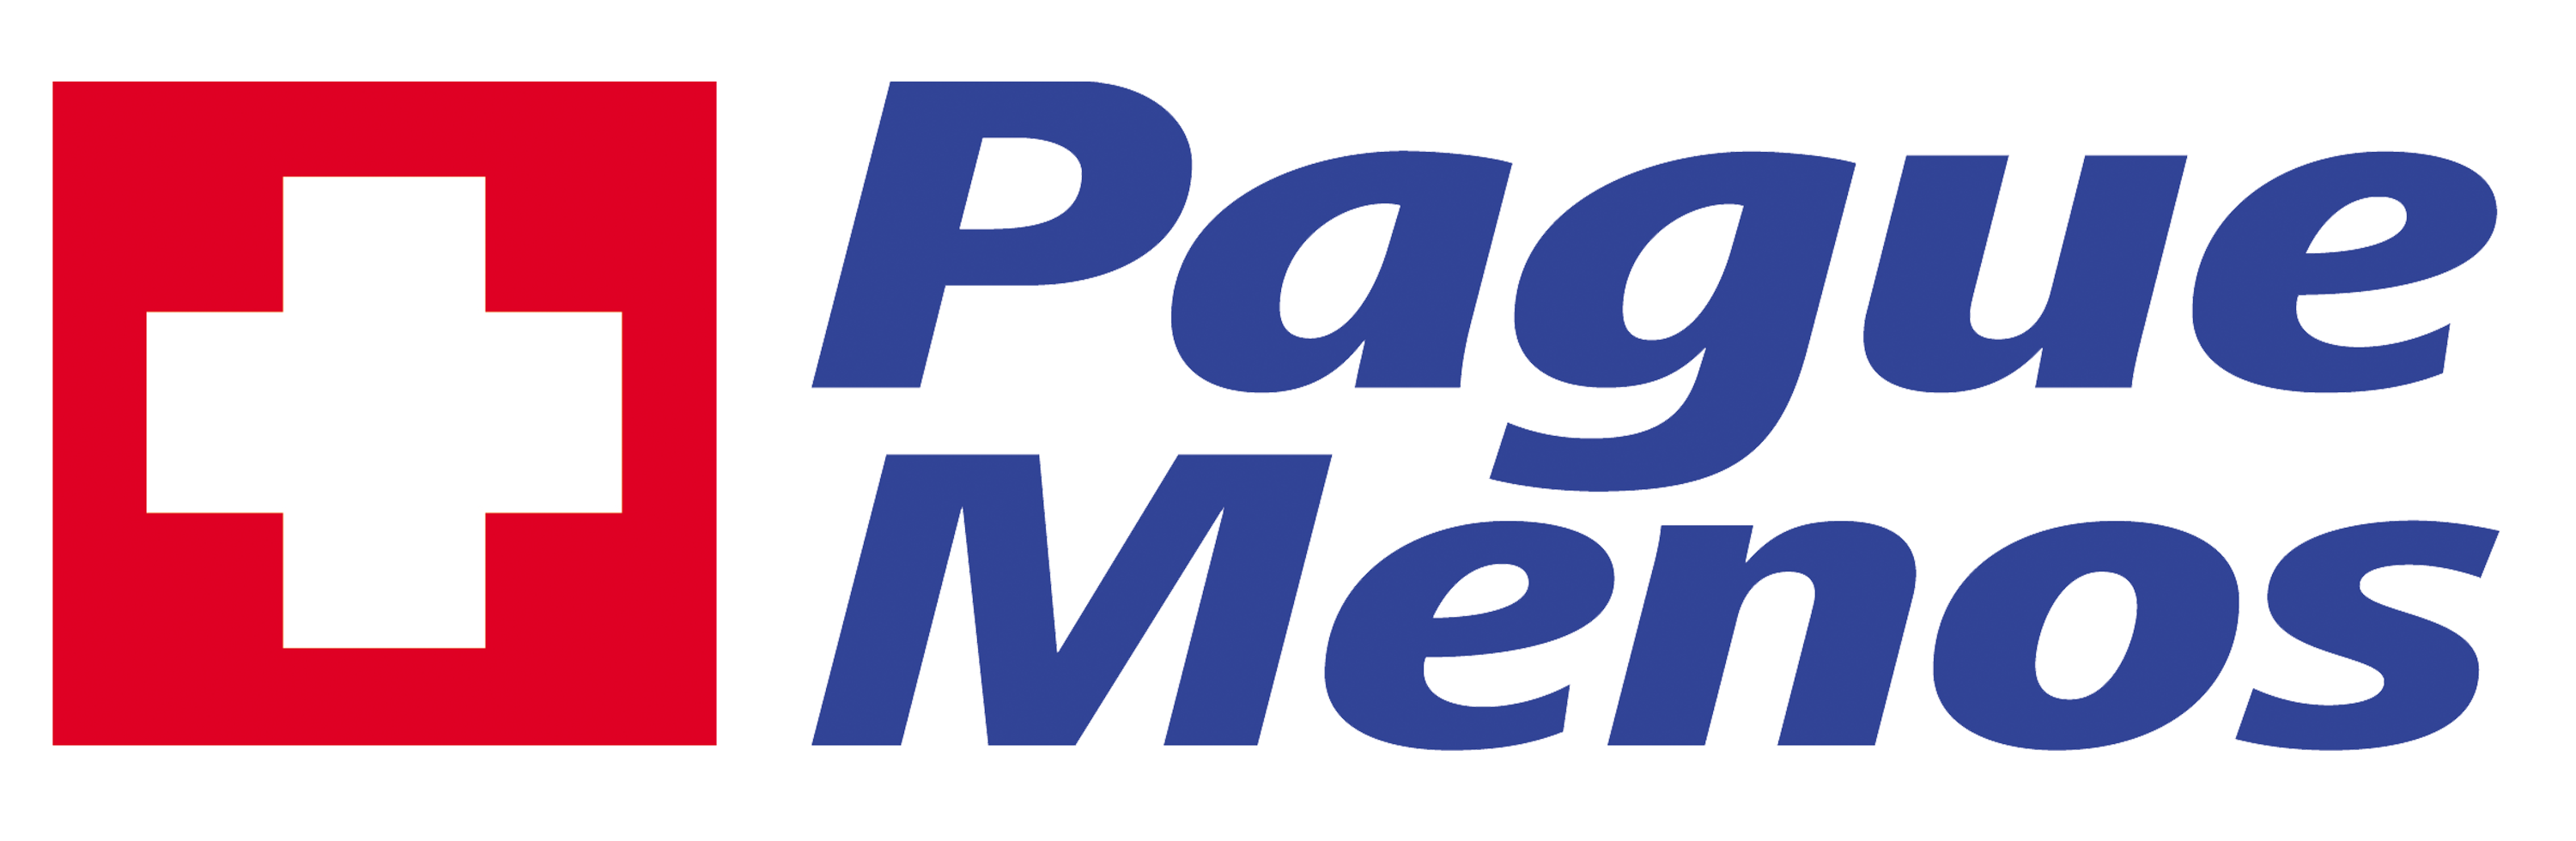 Farmacia Pague Menos-Guananbi BA